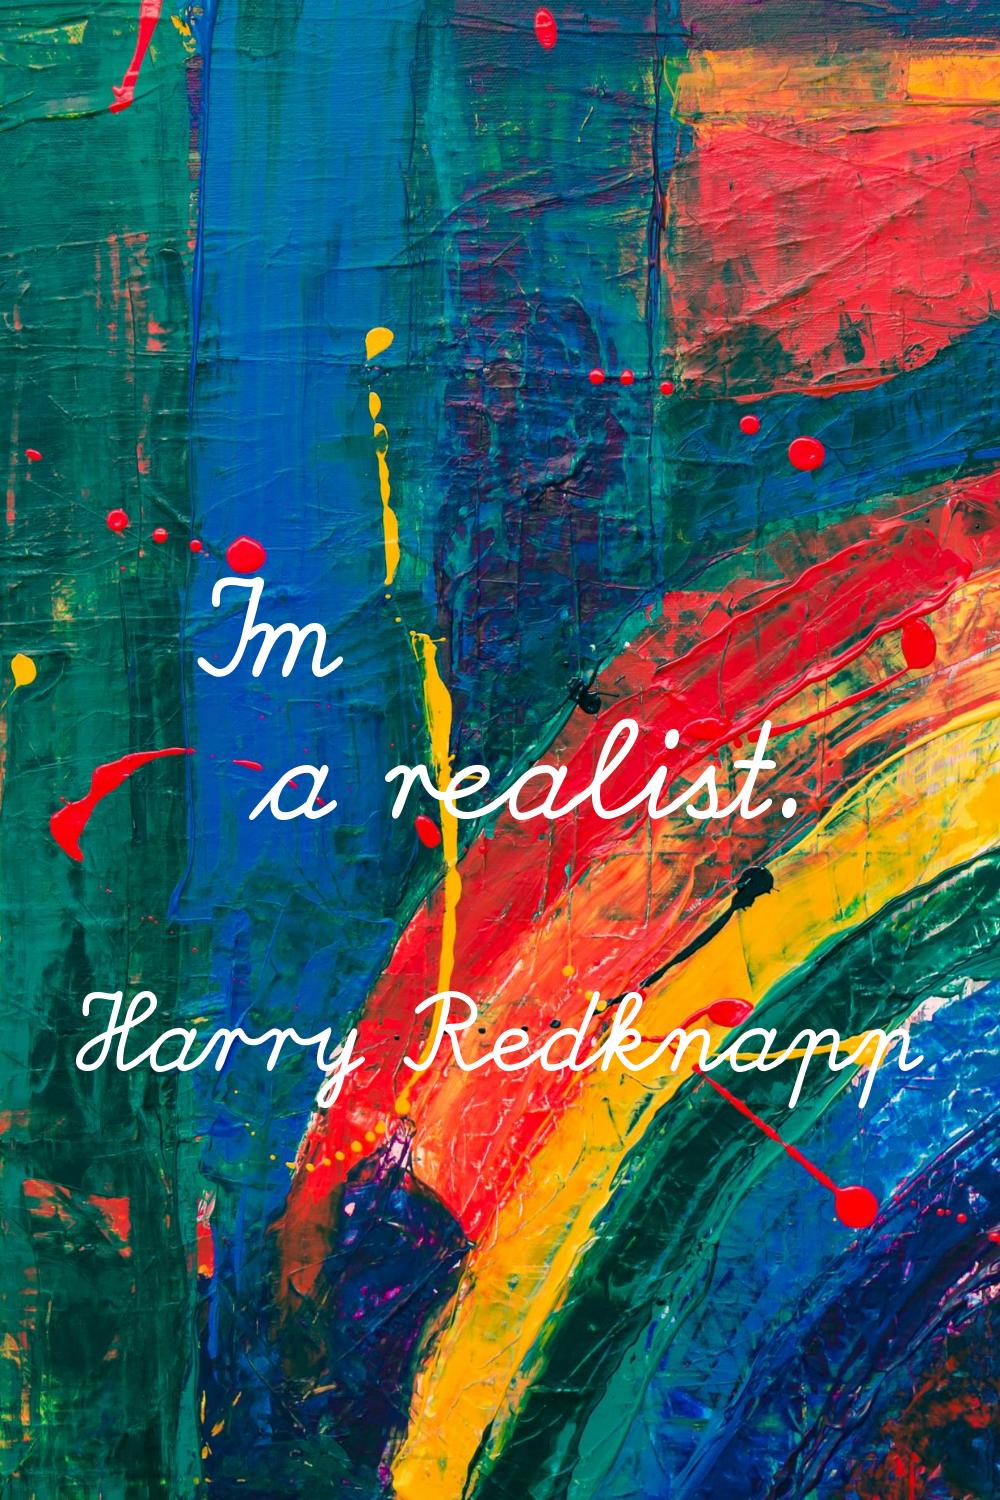 I'm a realist.